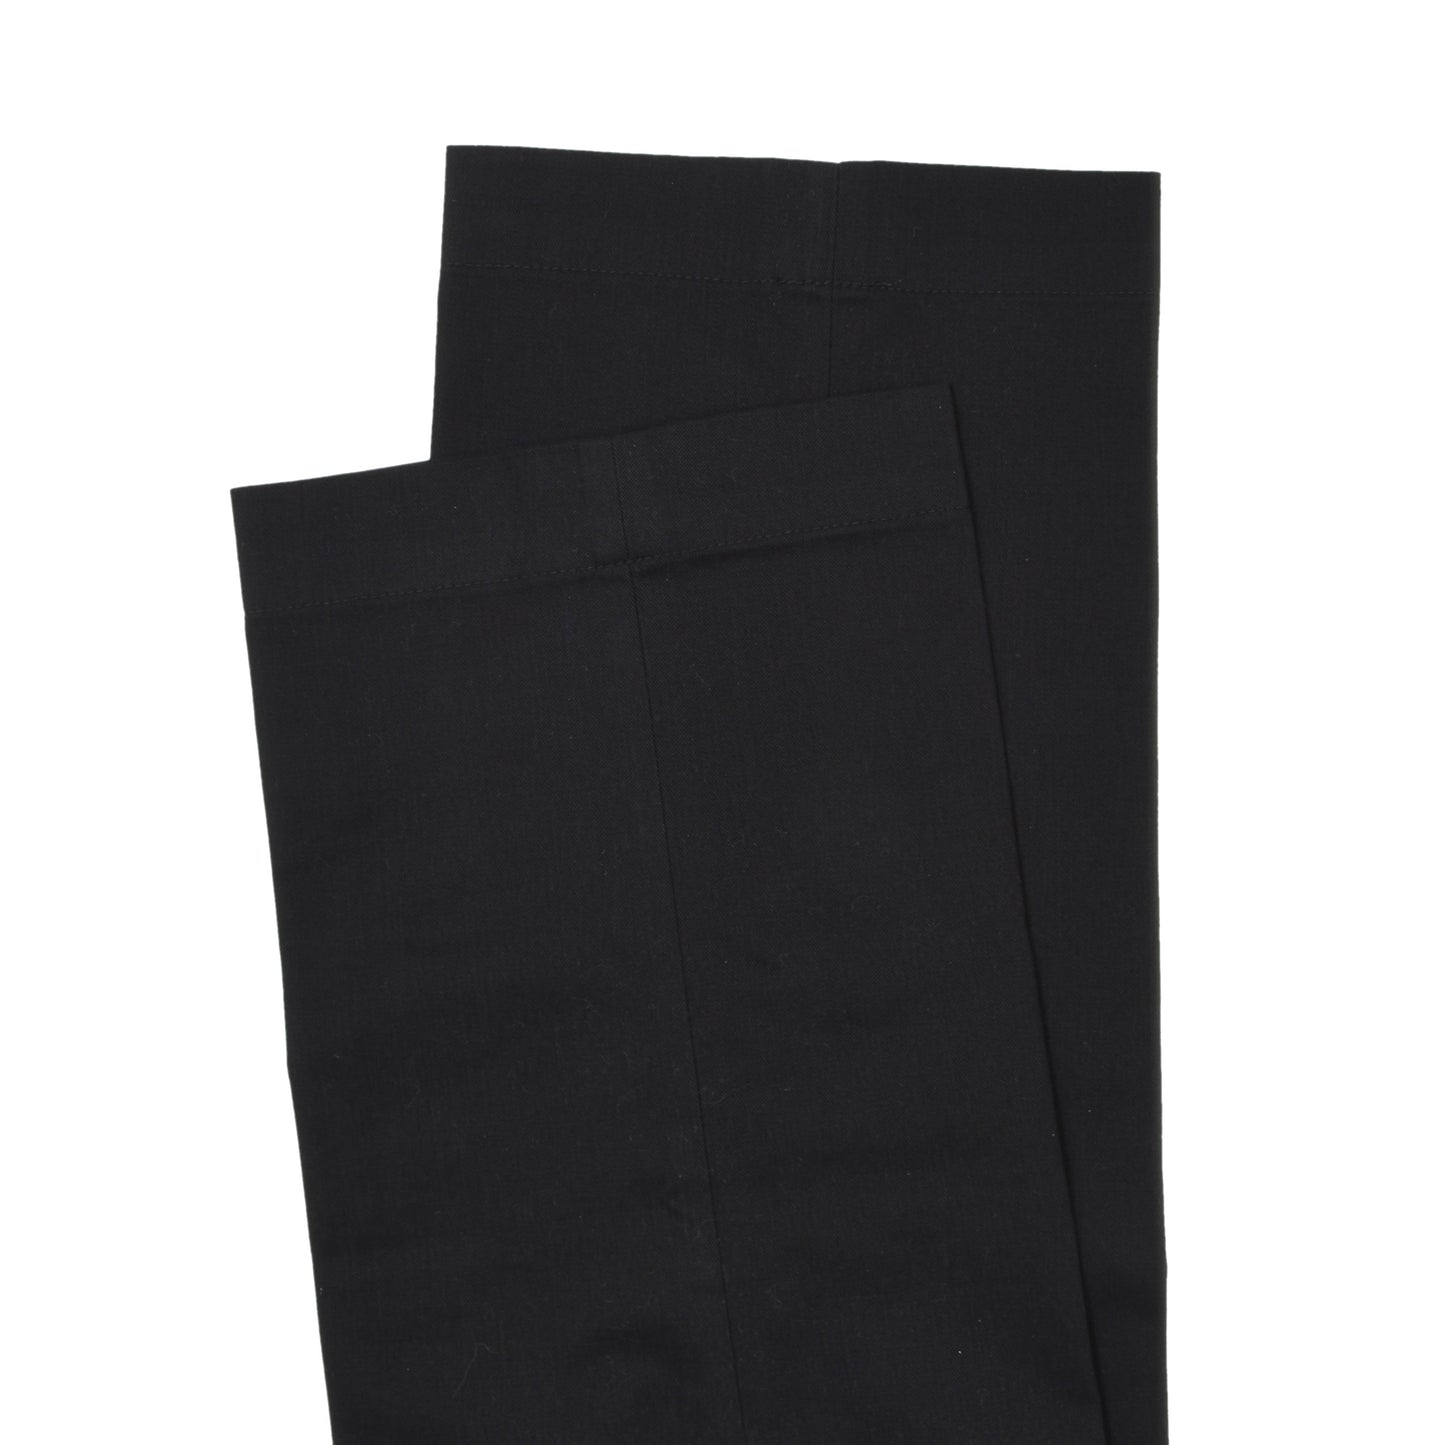 Joop! Cotton Chinos/Pants Size 48 - Black